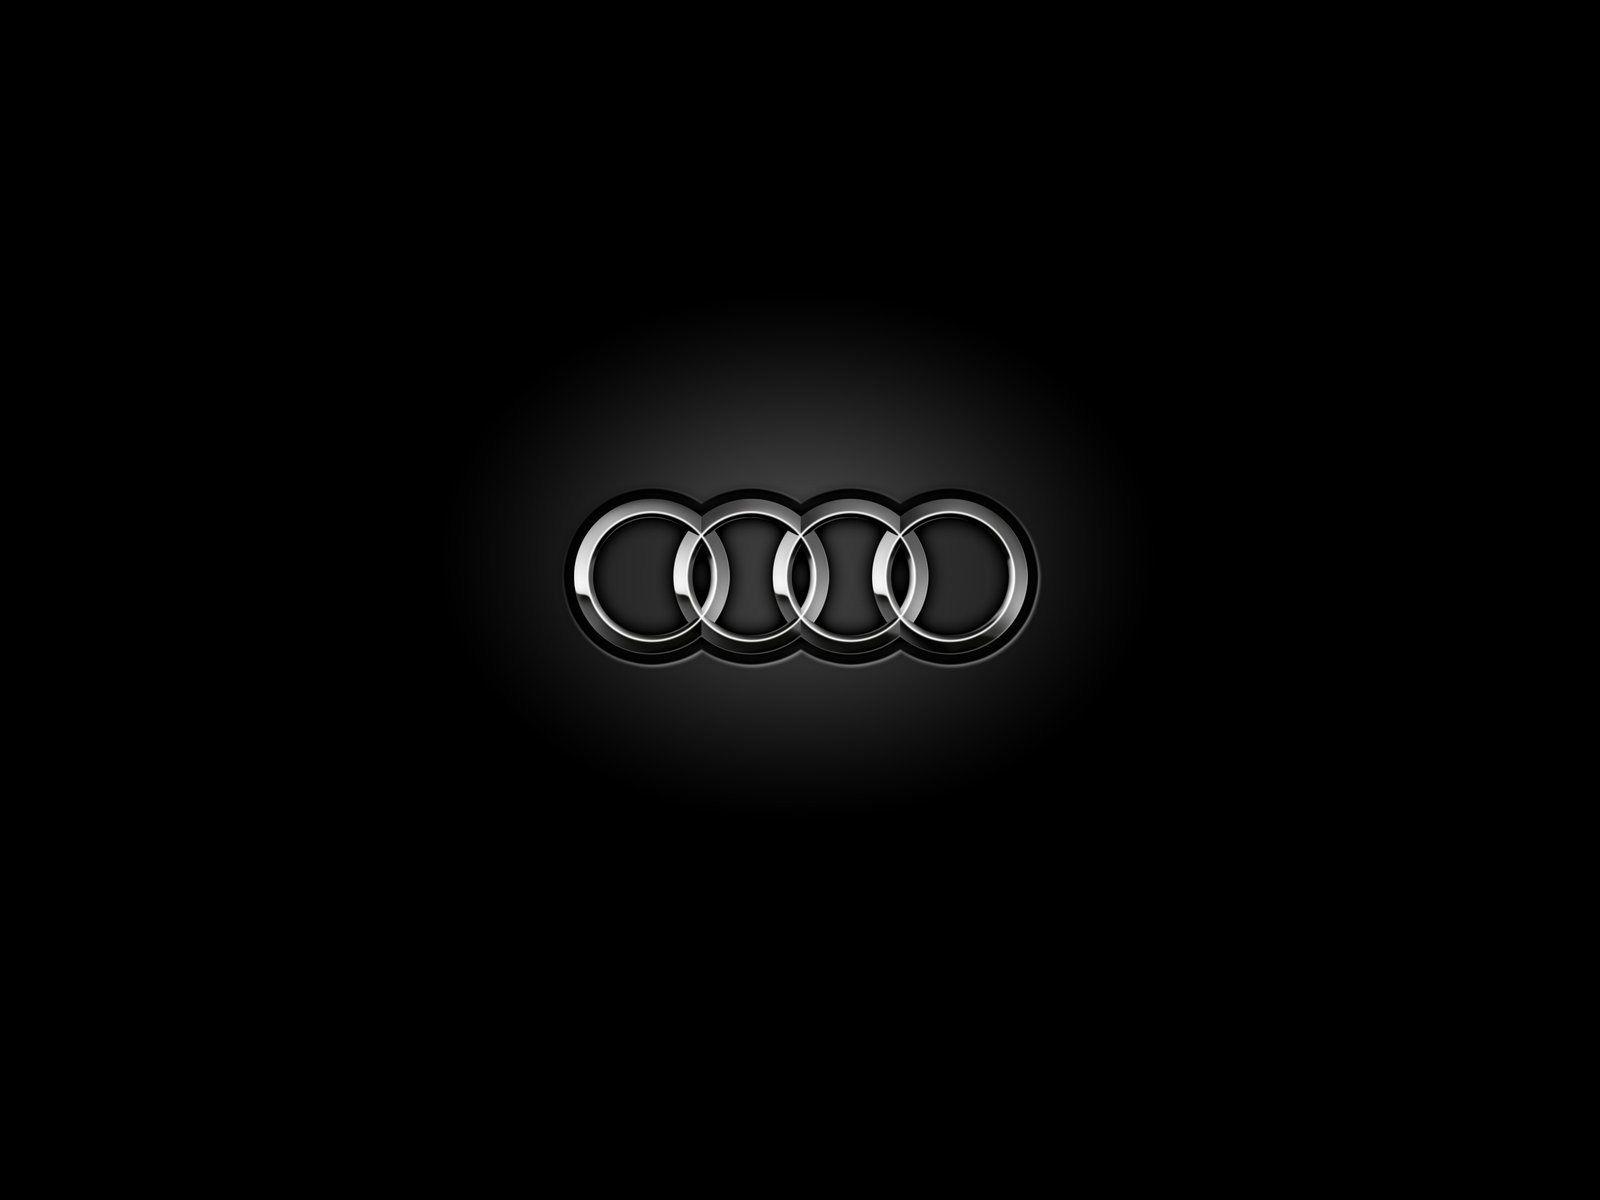 Download HD Wallpaper Of Car Logos Widescreen High Resolution A